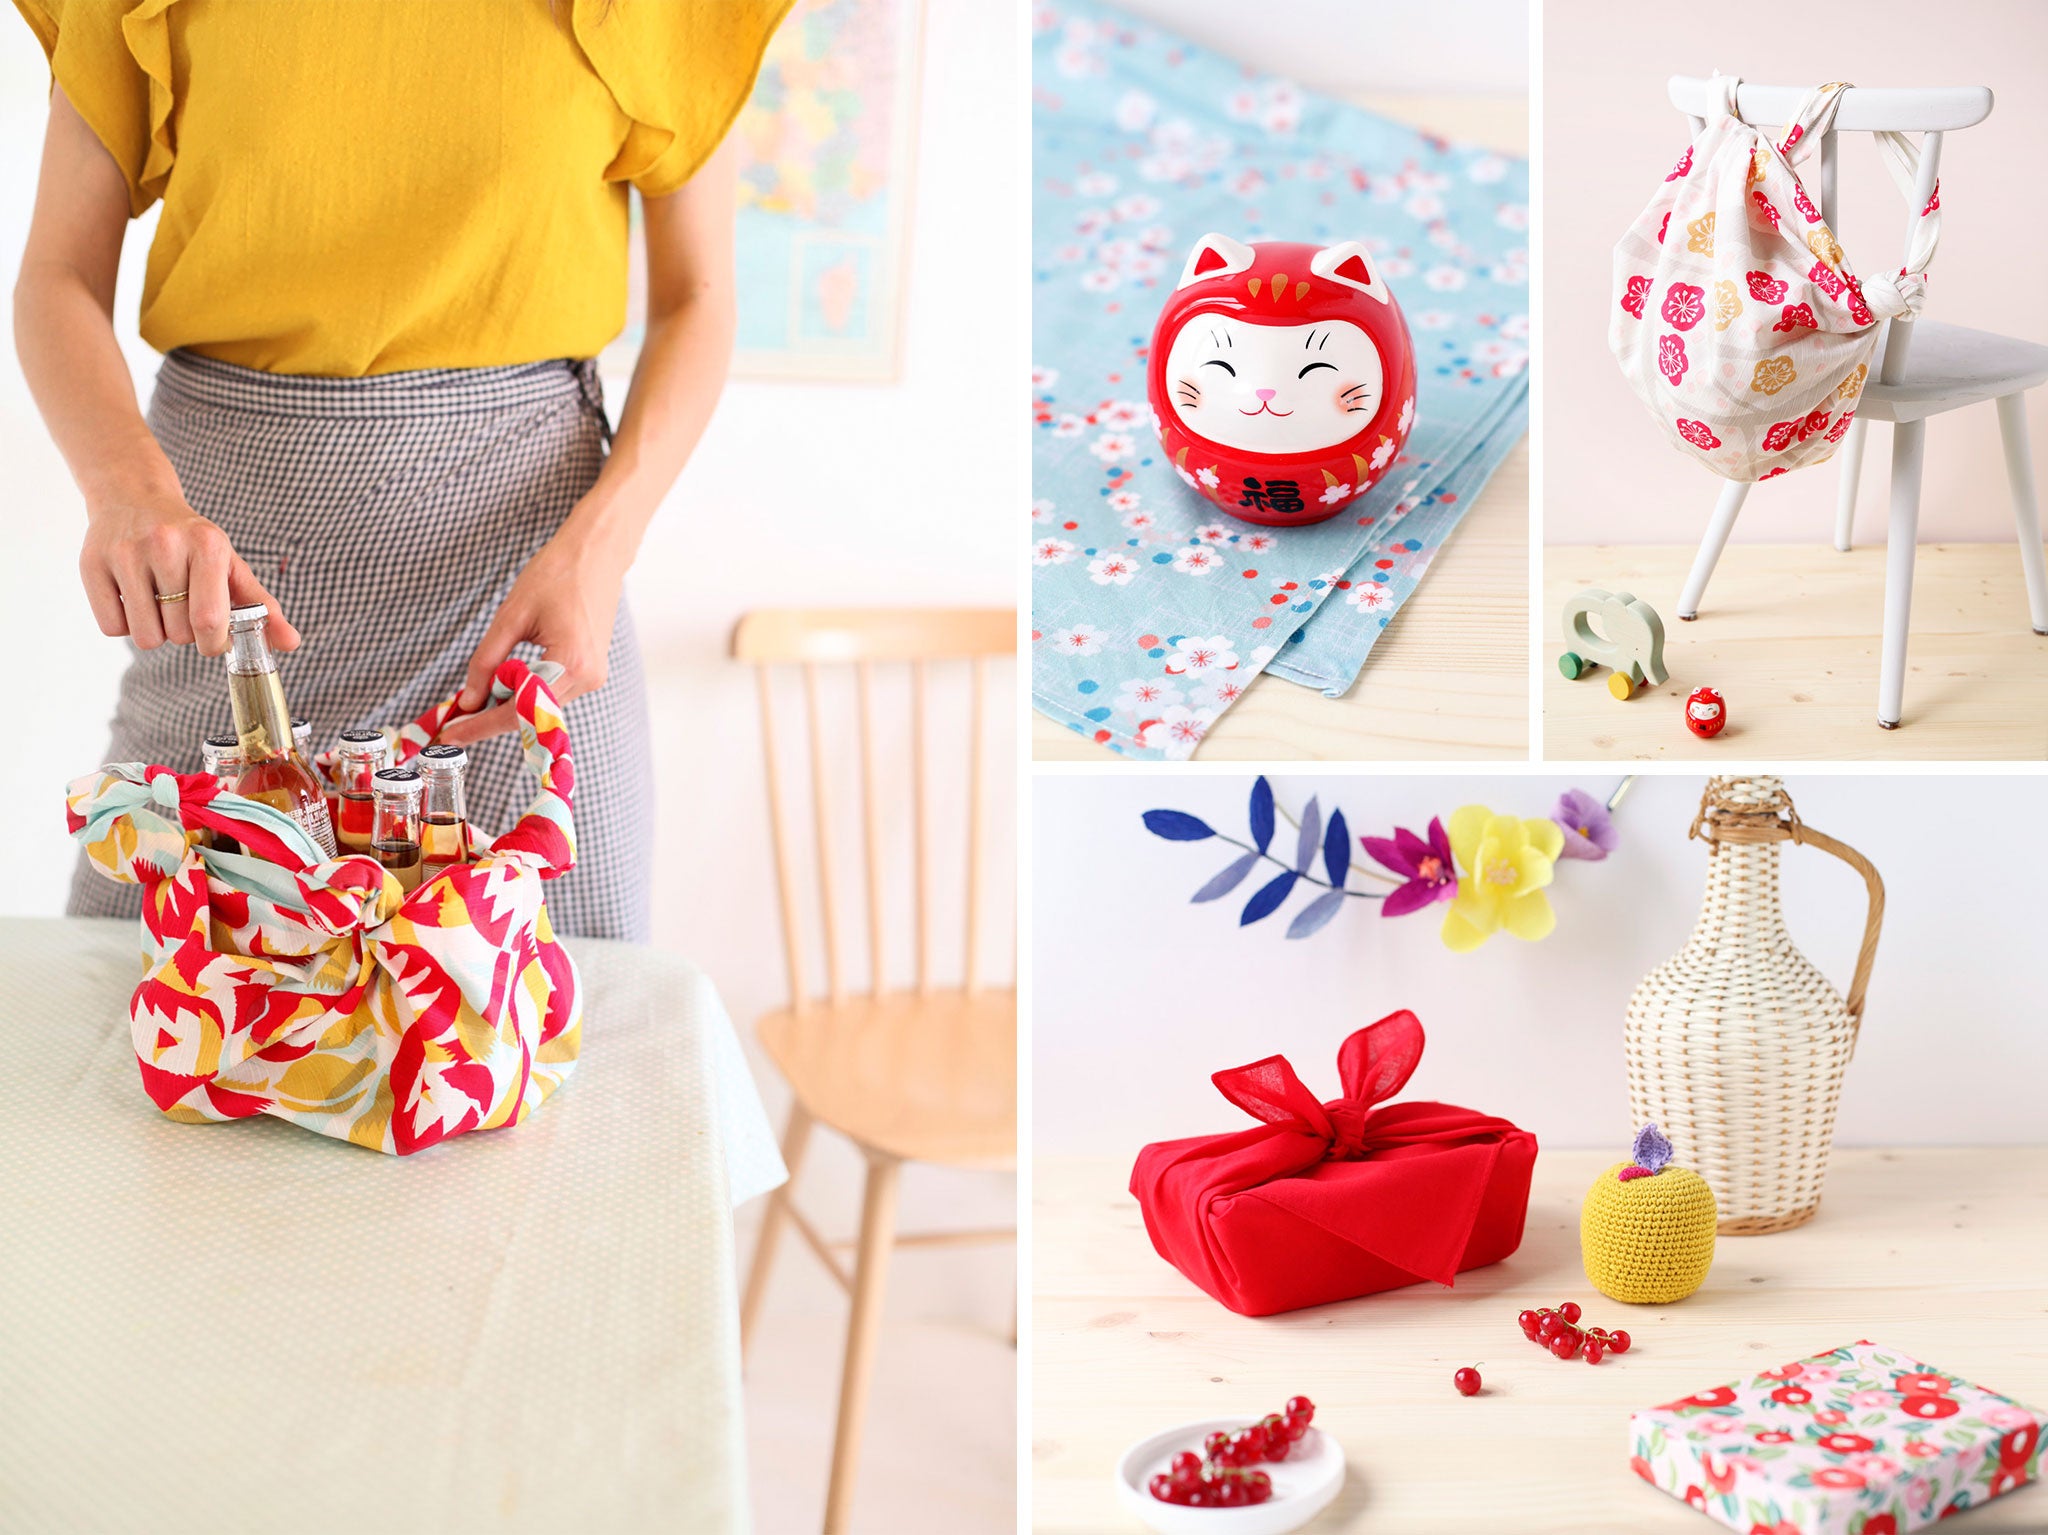 photos-ambiance-coloree-rouge-utilisations-furoshiki-article-blog-livre-atelier-furoshiki-decouvrir-art-japonais-pliage-tissu-adeline-klam